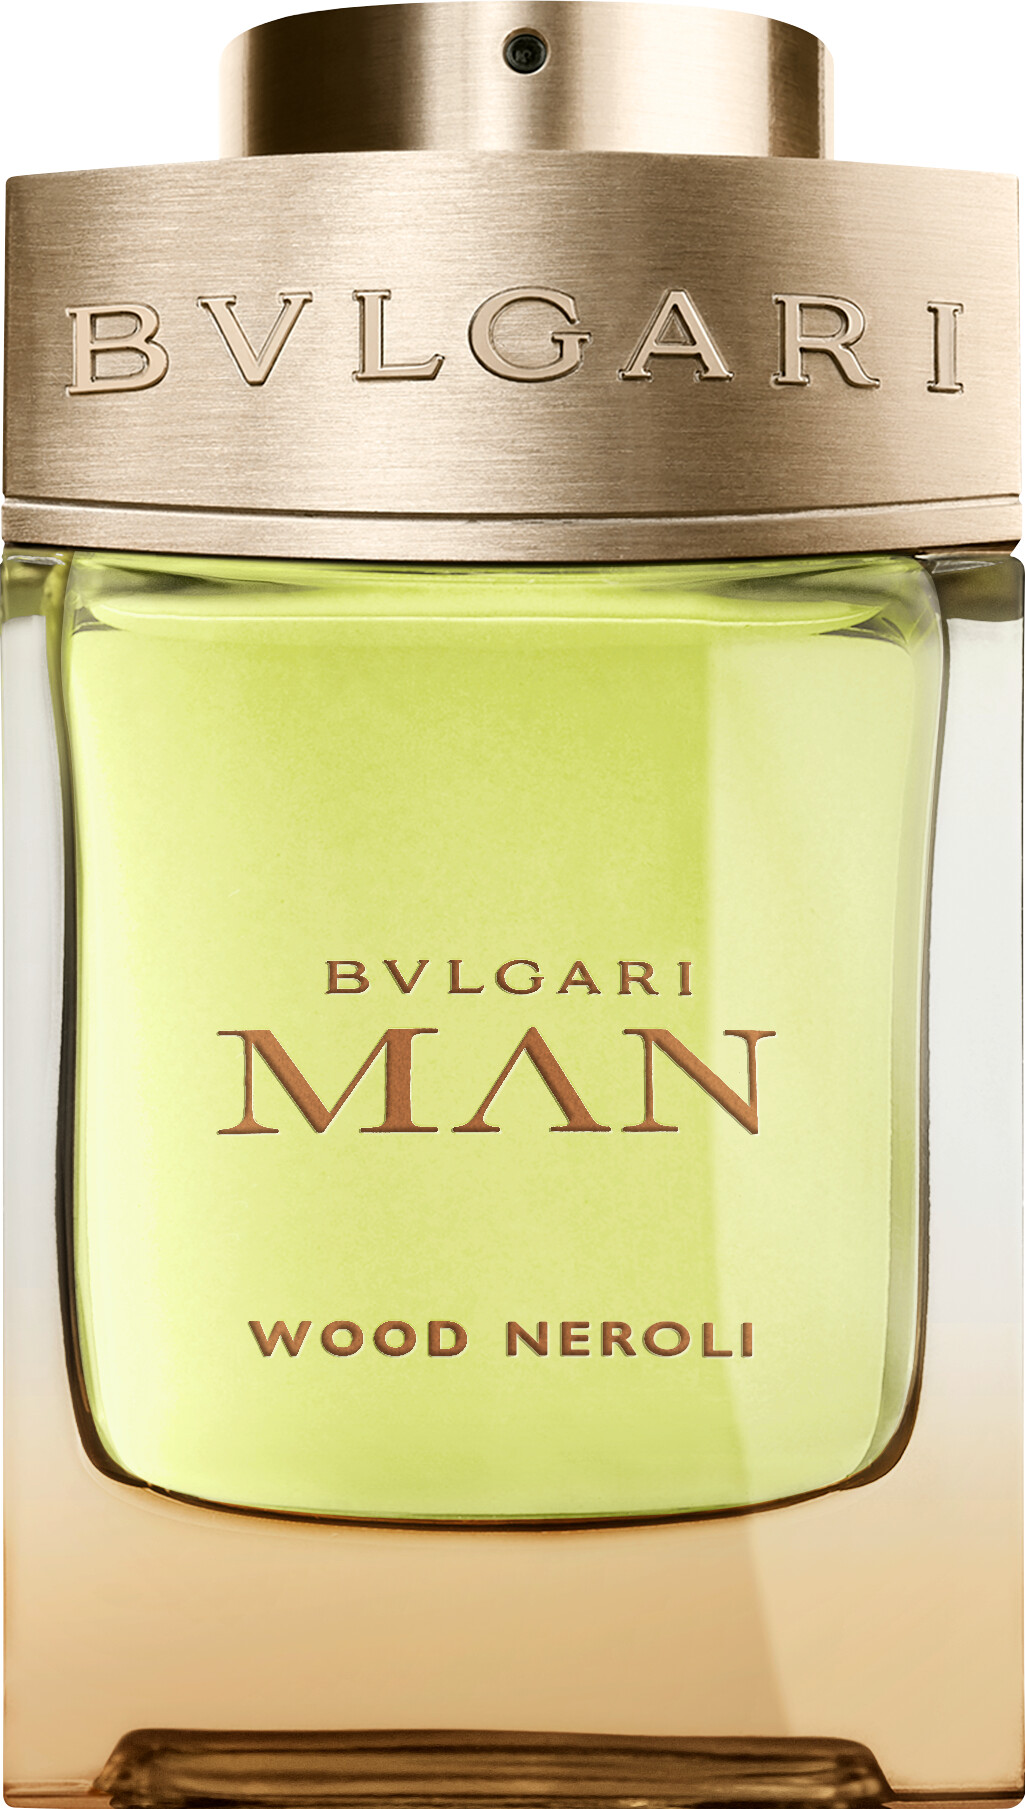 bvlgari man wood neroli